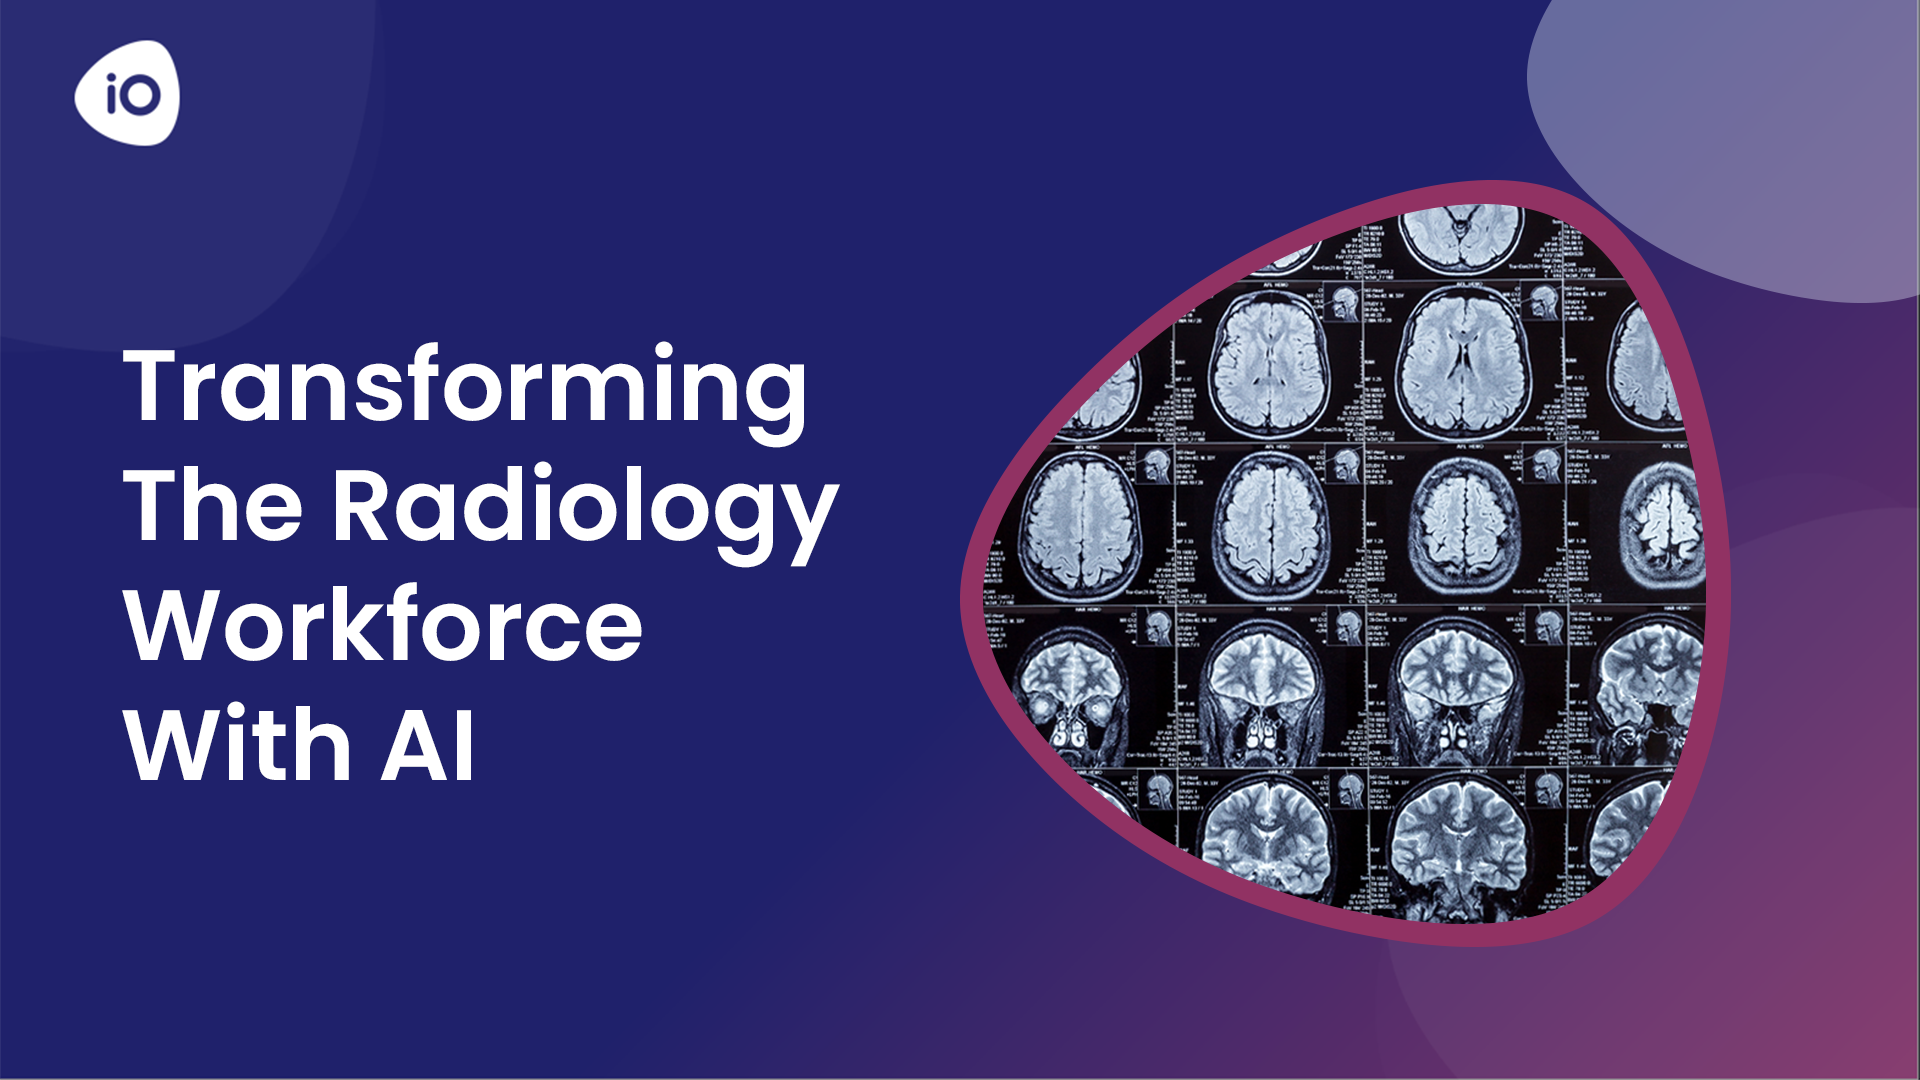 Transforming the Radiology Workforce using AI